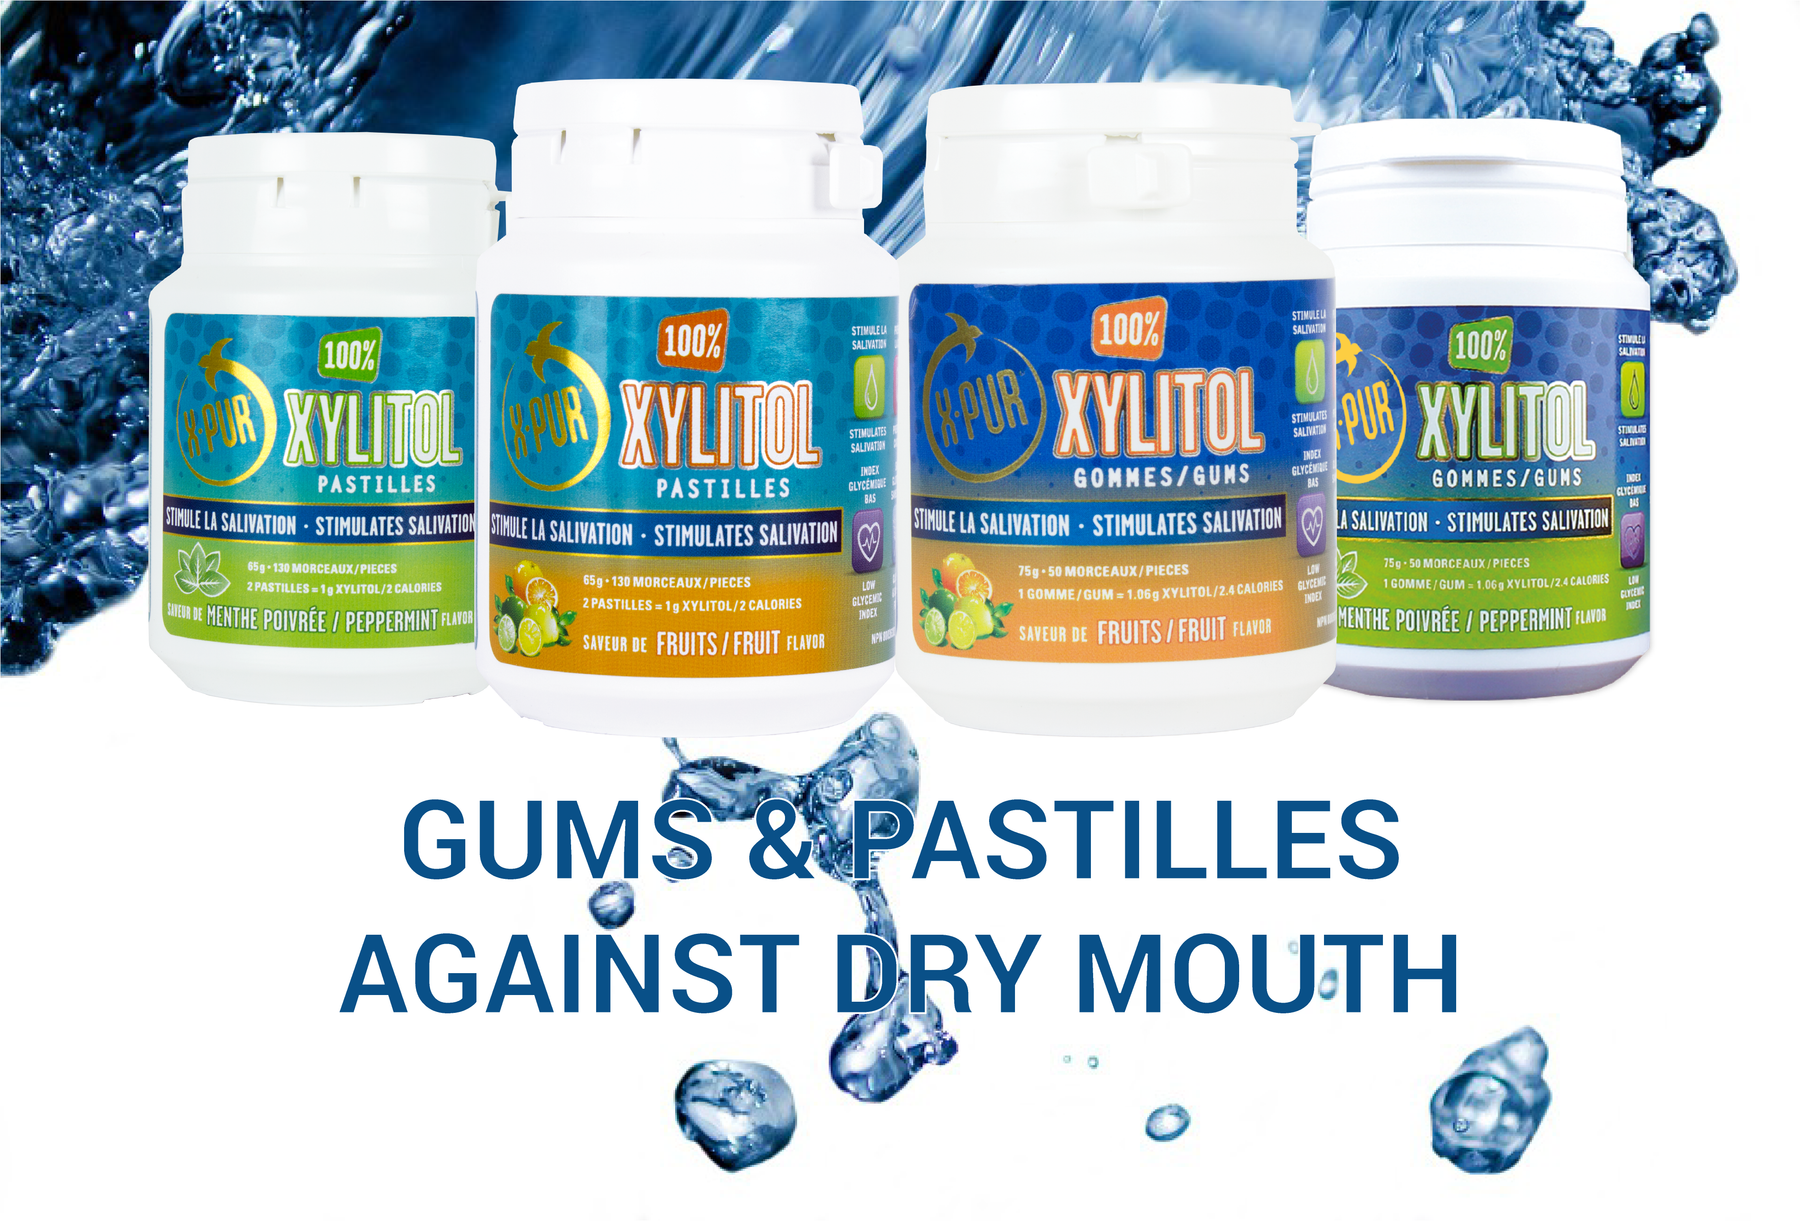 X-PUR 100% Xylitol: Gums & Pastilles Against Dry Mouth